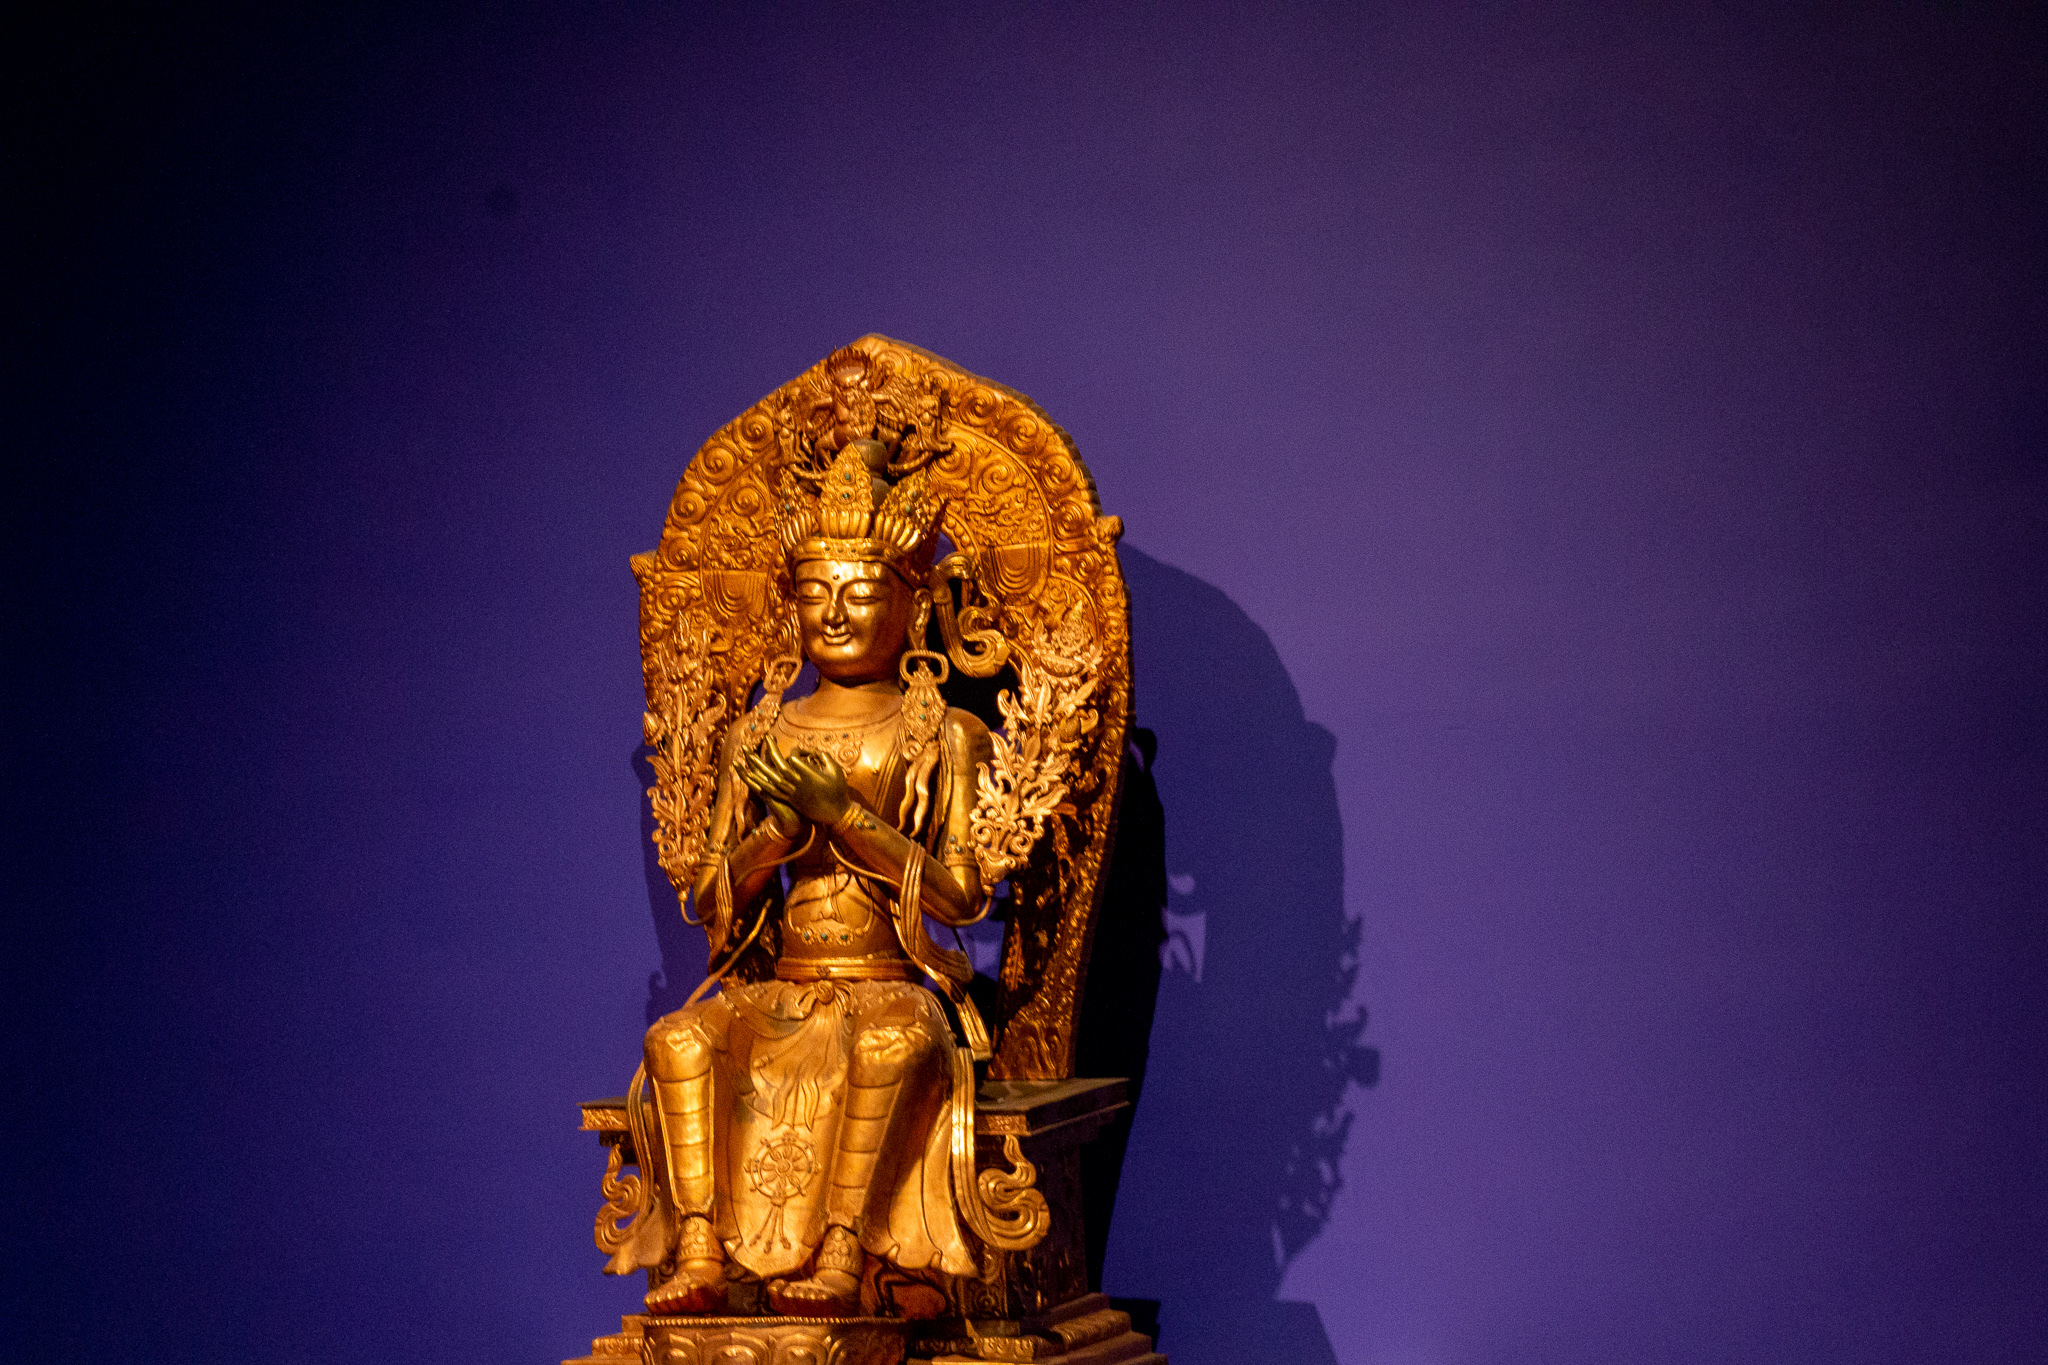 A golden figure of the Future Buddha against a deep purple wall